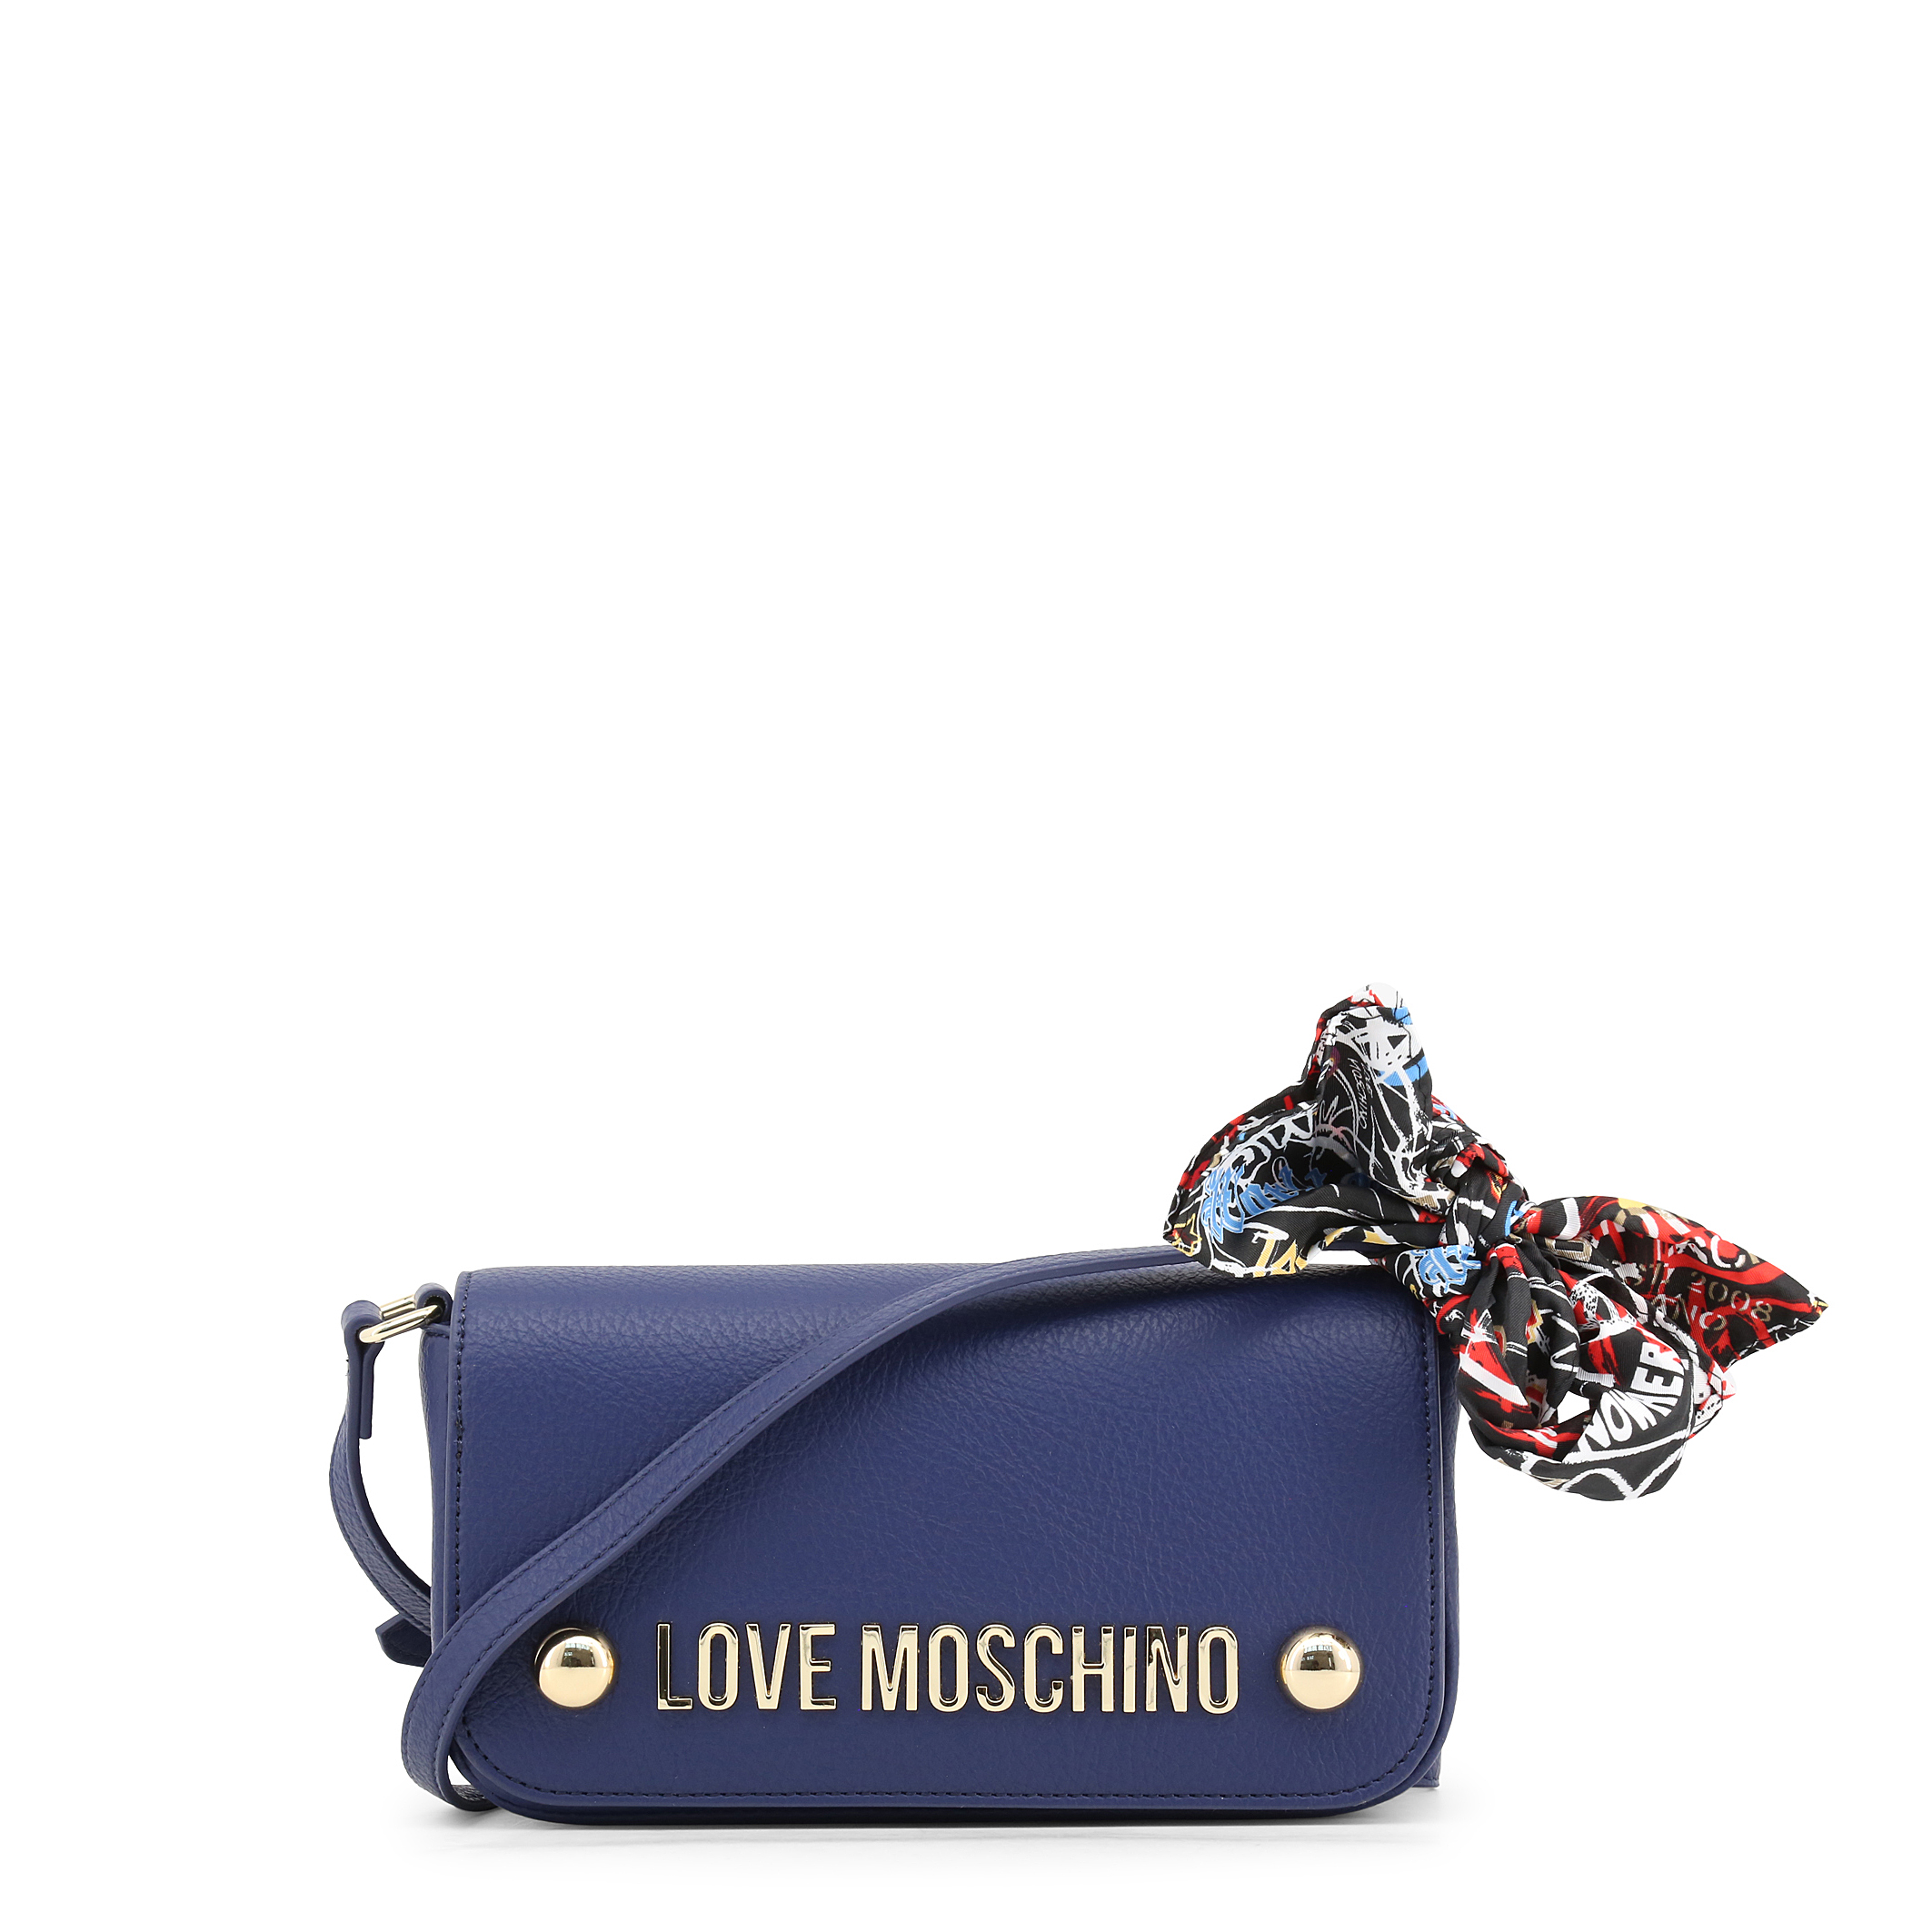 blue love moschino bag